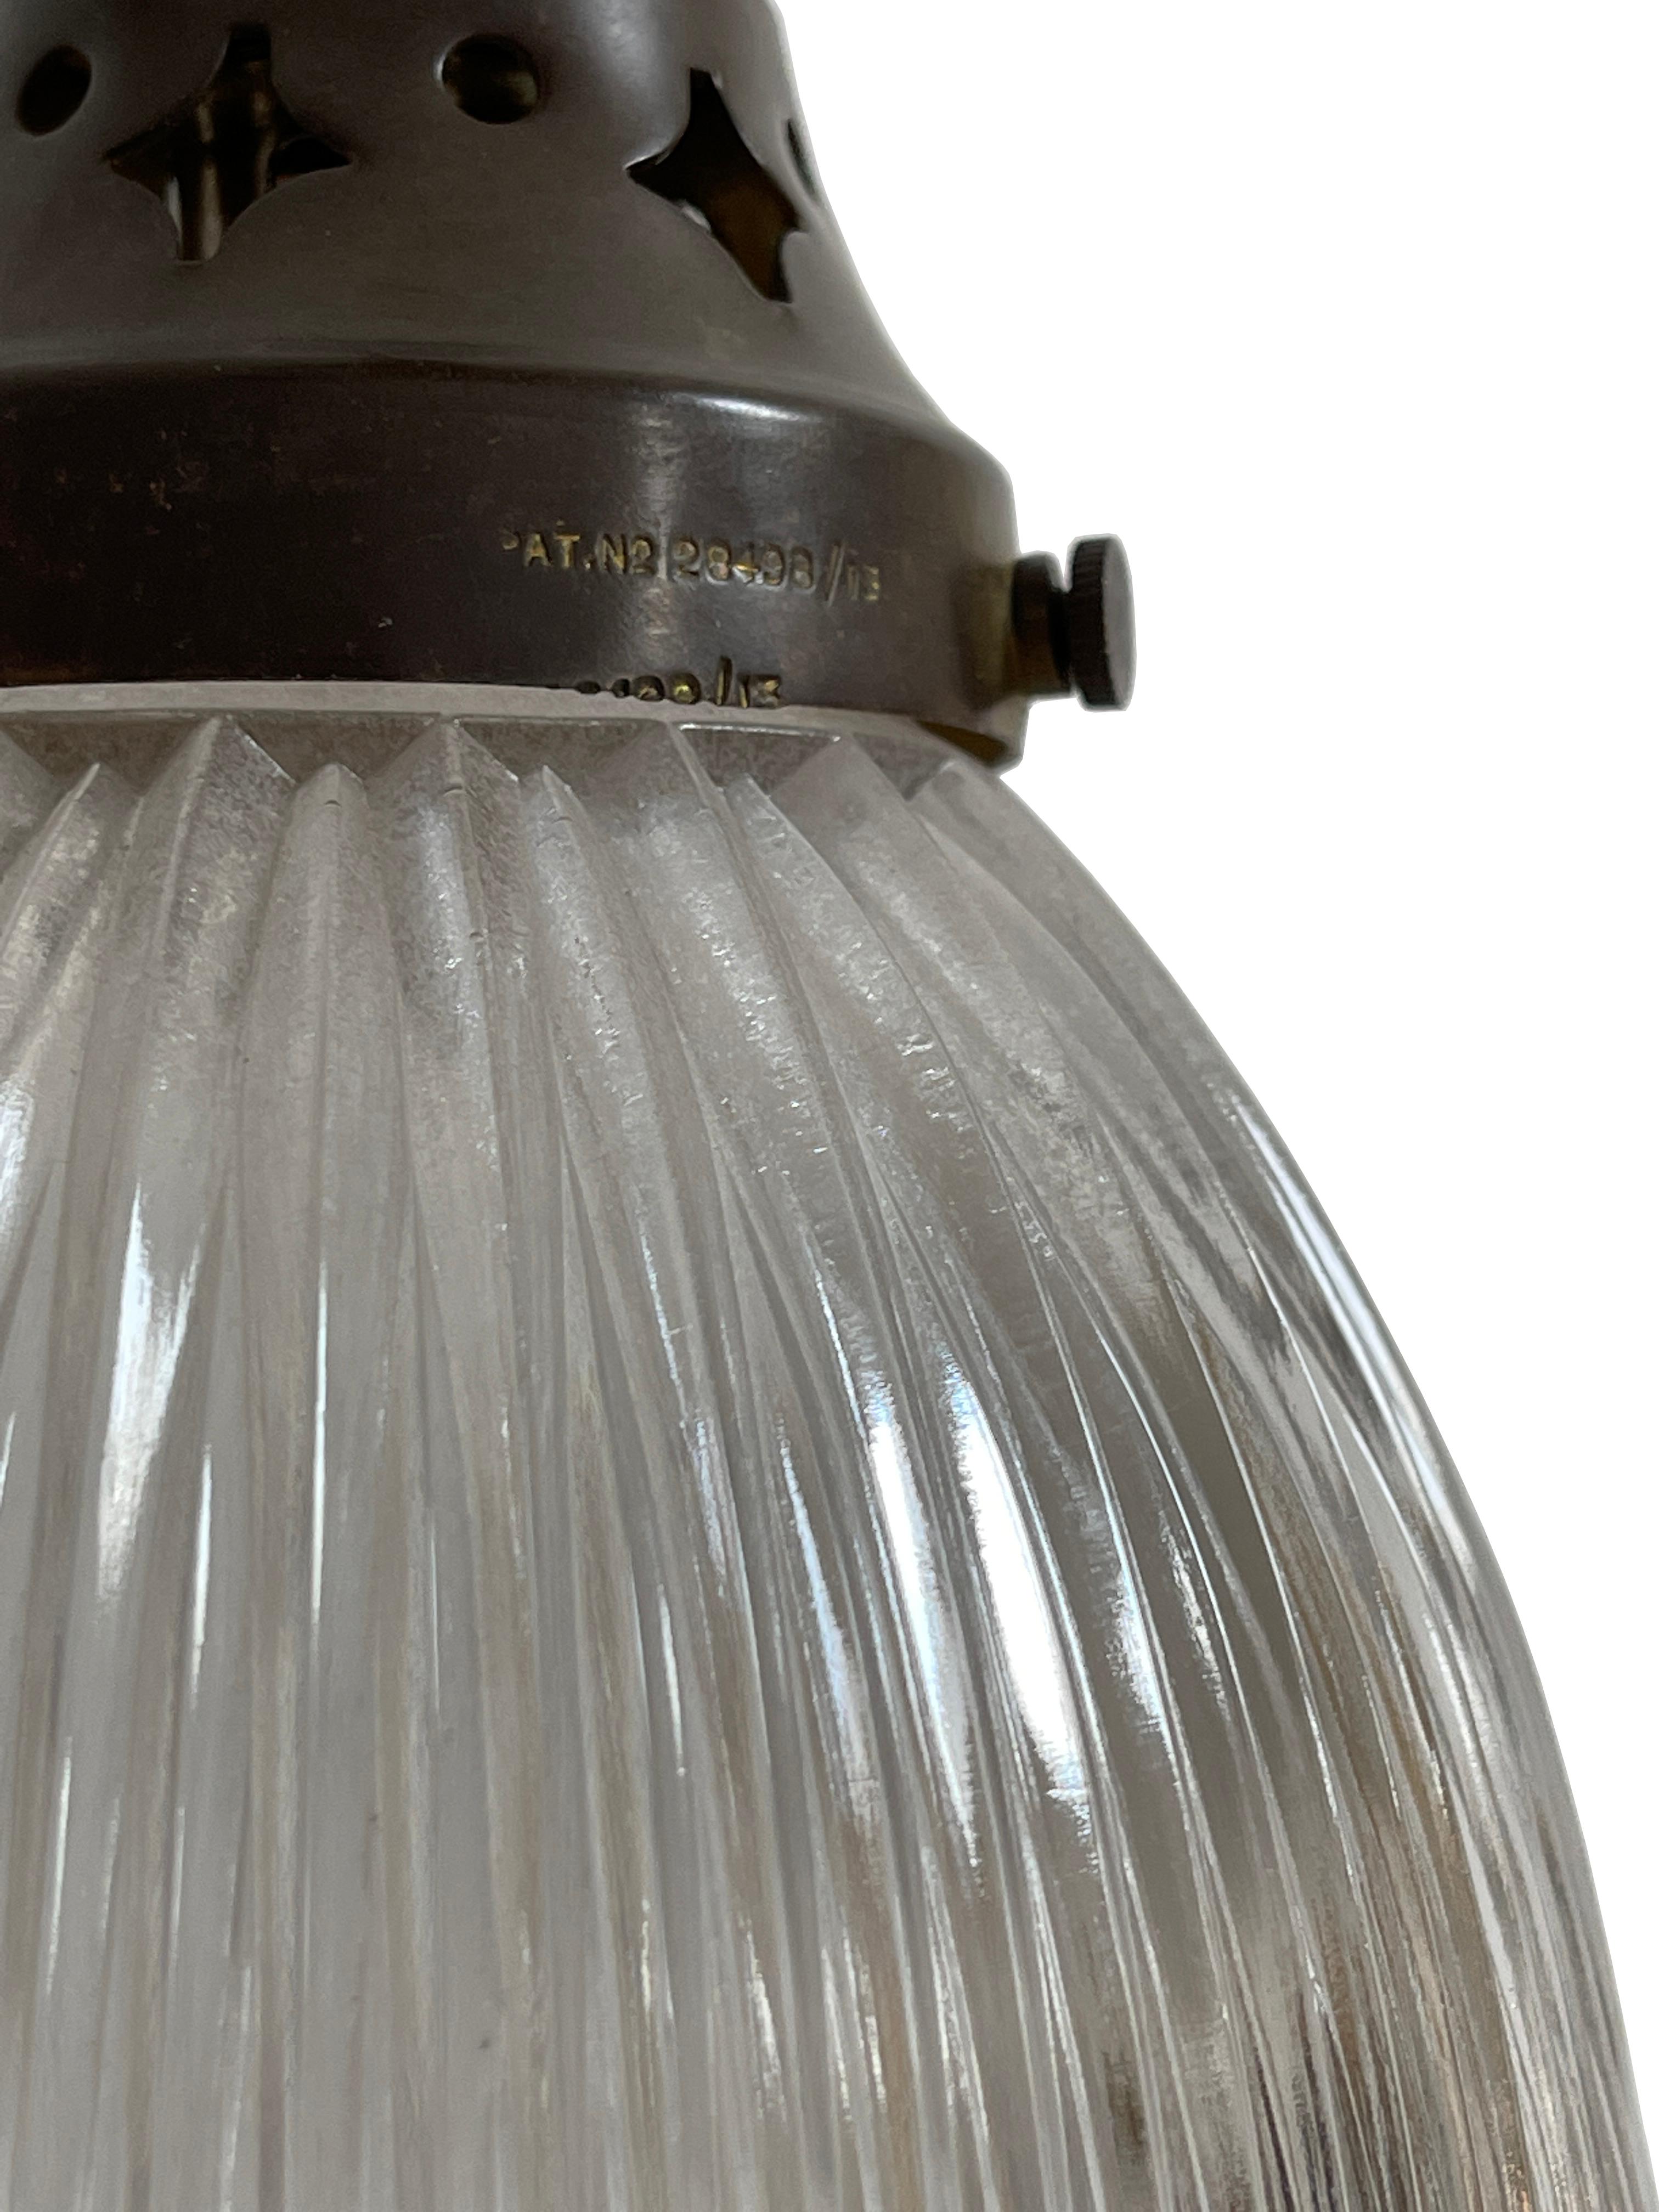 Large Antique Vintage Holophane Ceiling Chandelier Pendant Lamp Wall Light Set For Sale 1